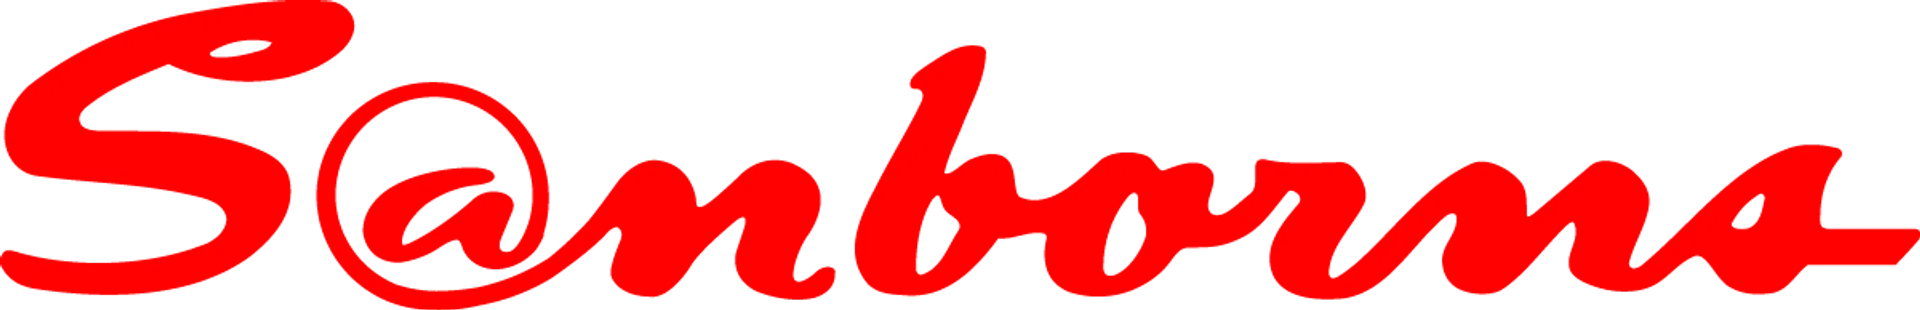 SANBORNS logo